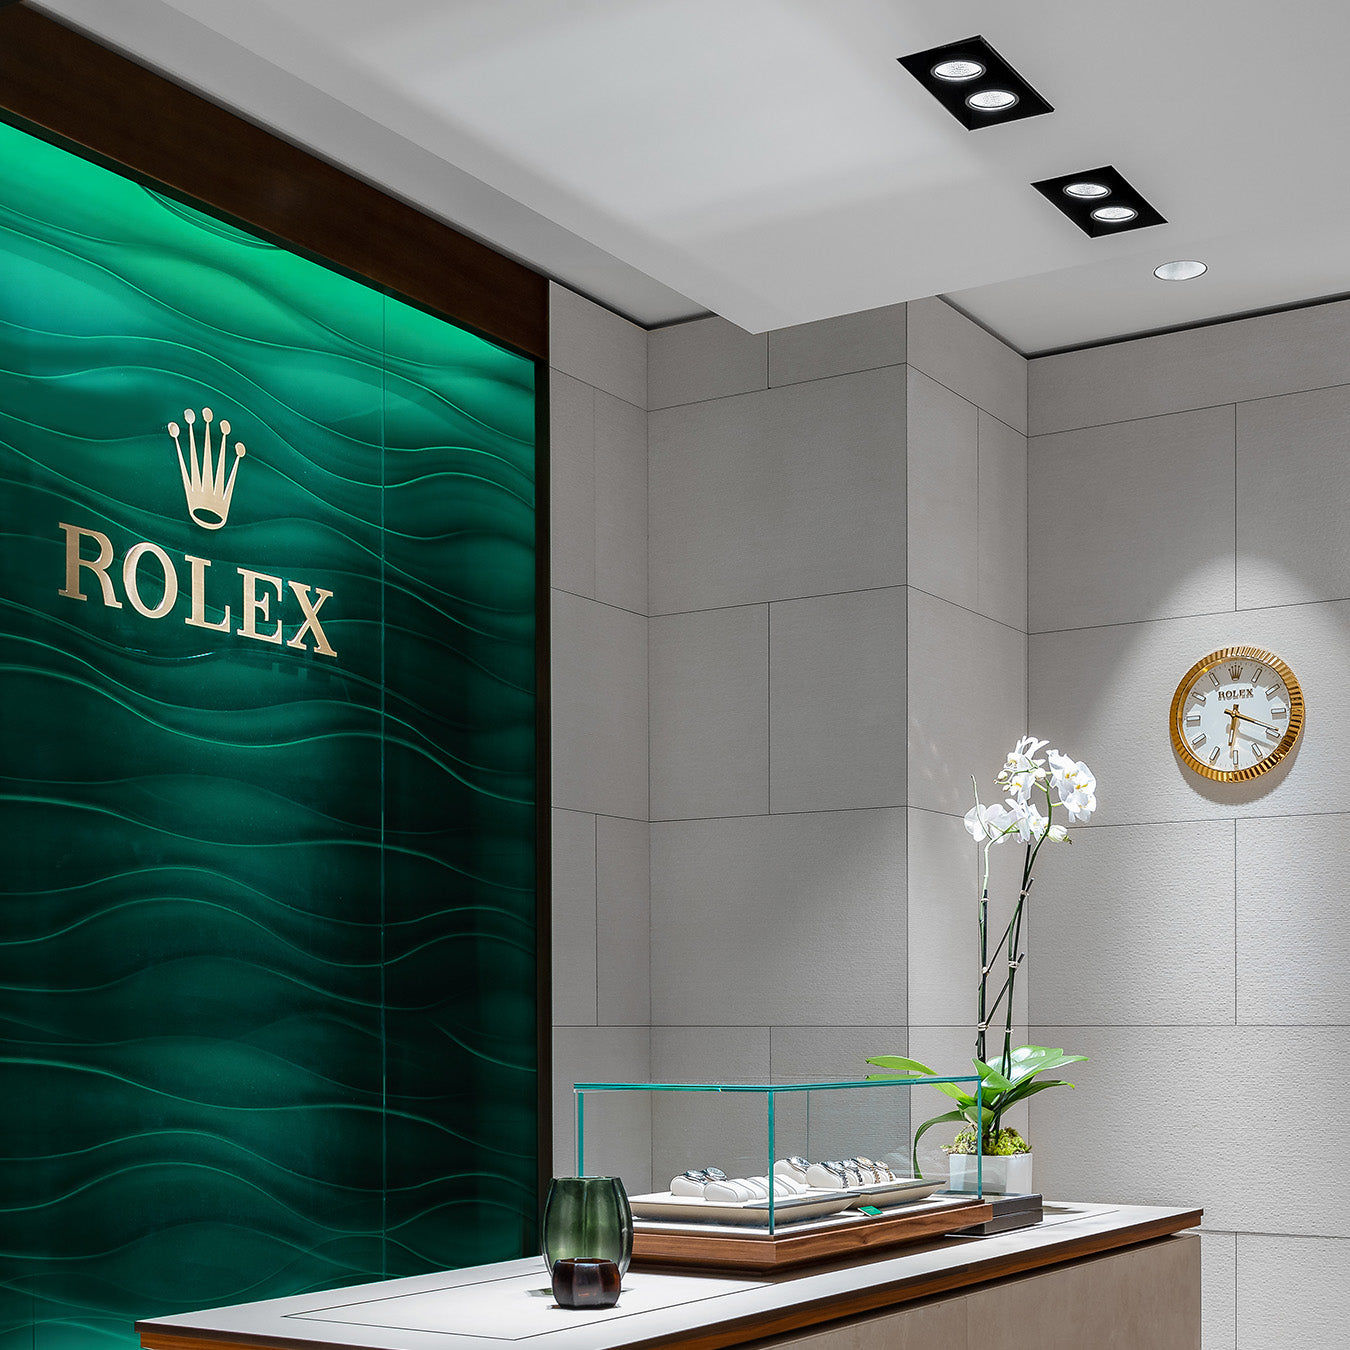 Rolex logo on wooden wall